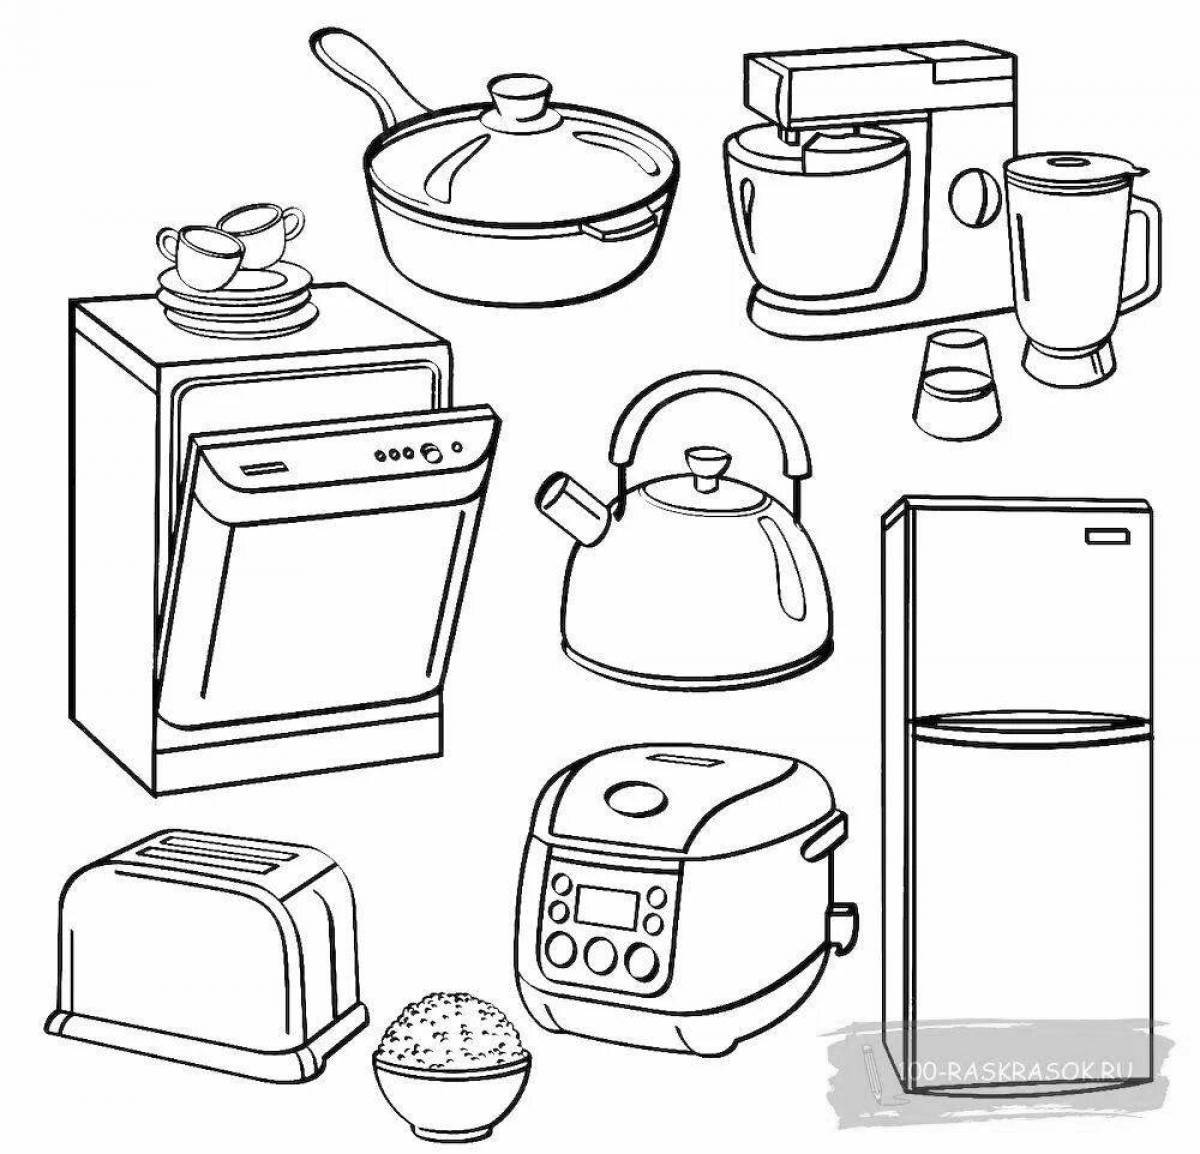 Kitchen appliances #2